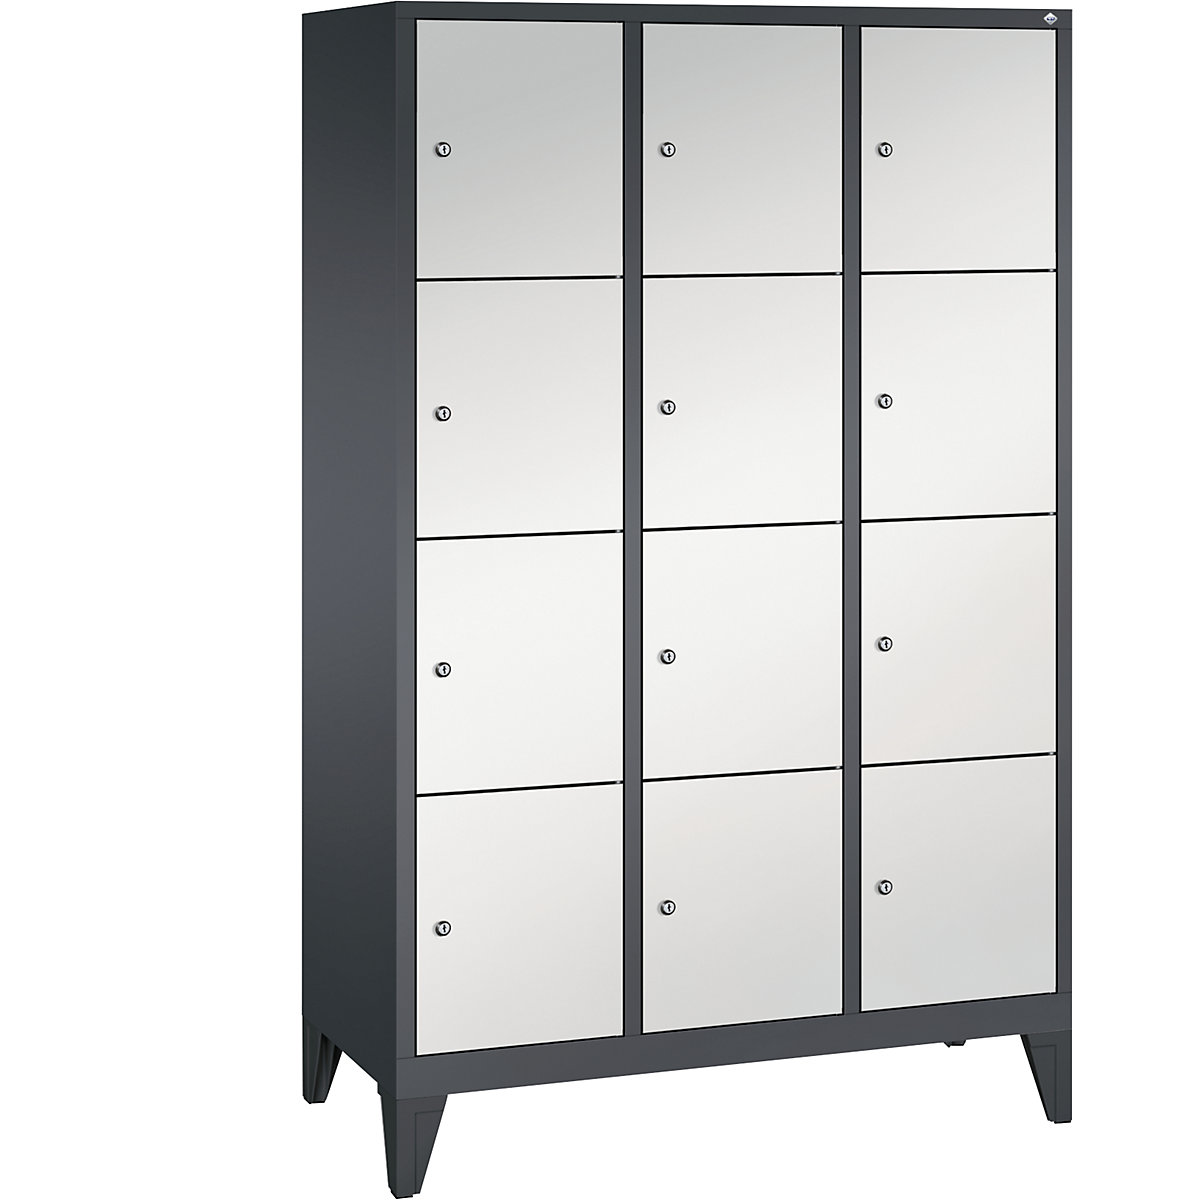 CLASSIC locker unit with feet – C+P, 3 compartments, 4 shelf compartments each, compartment width 400 mm, black grey / light grey-4